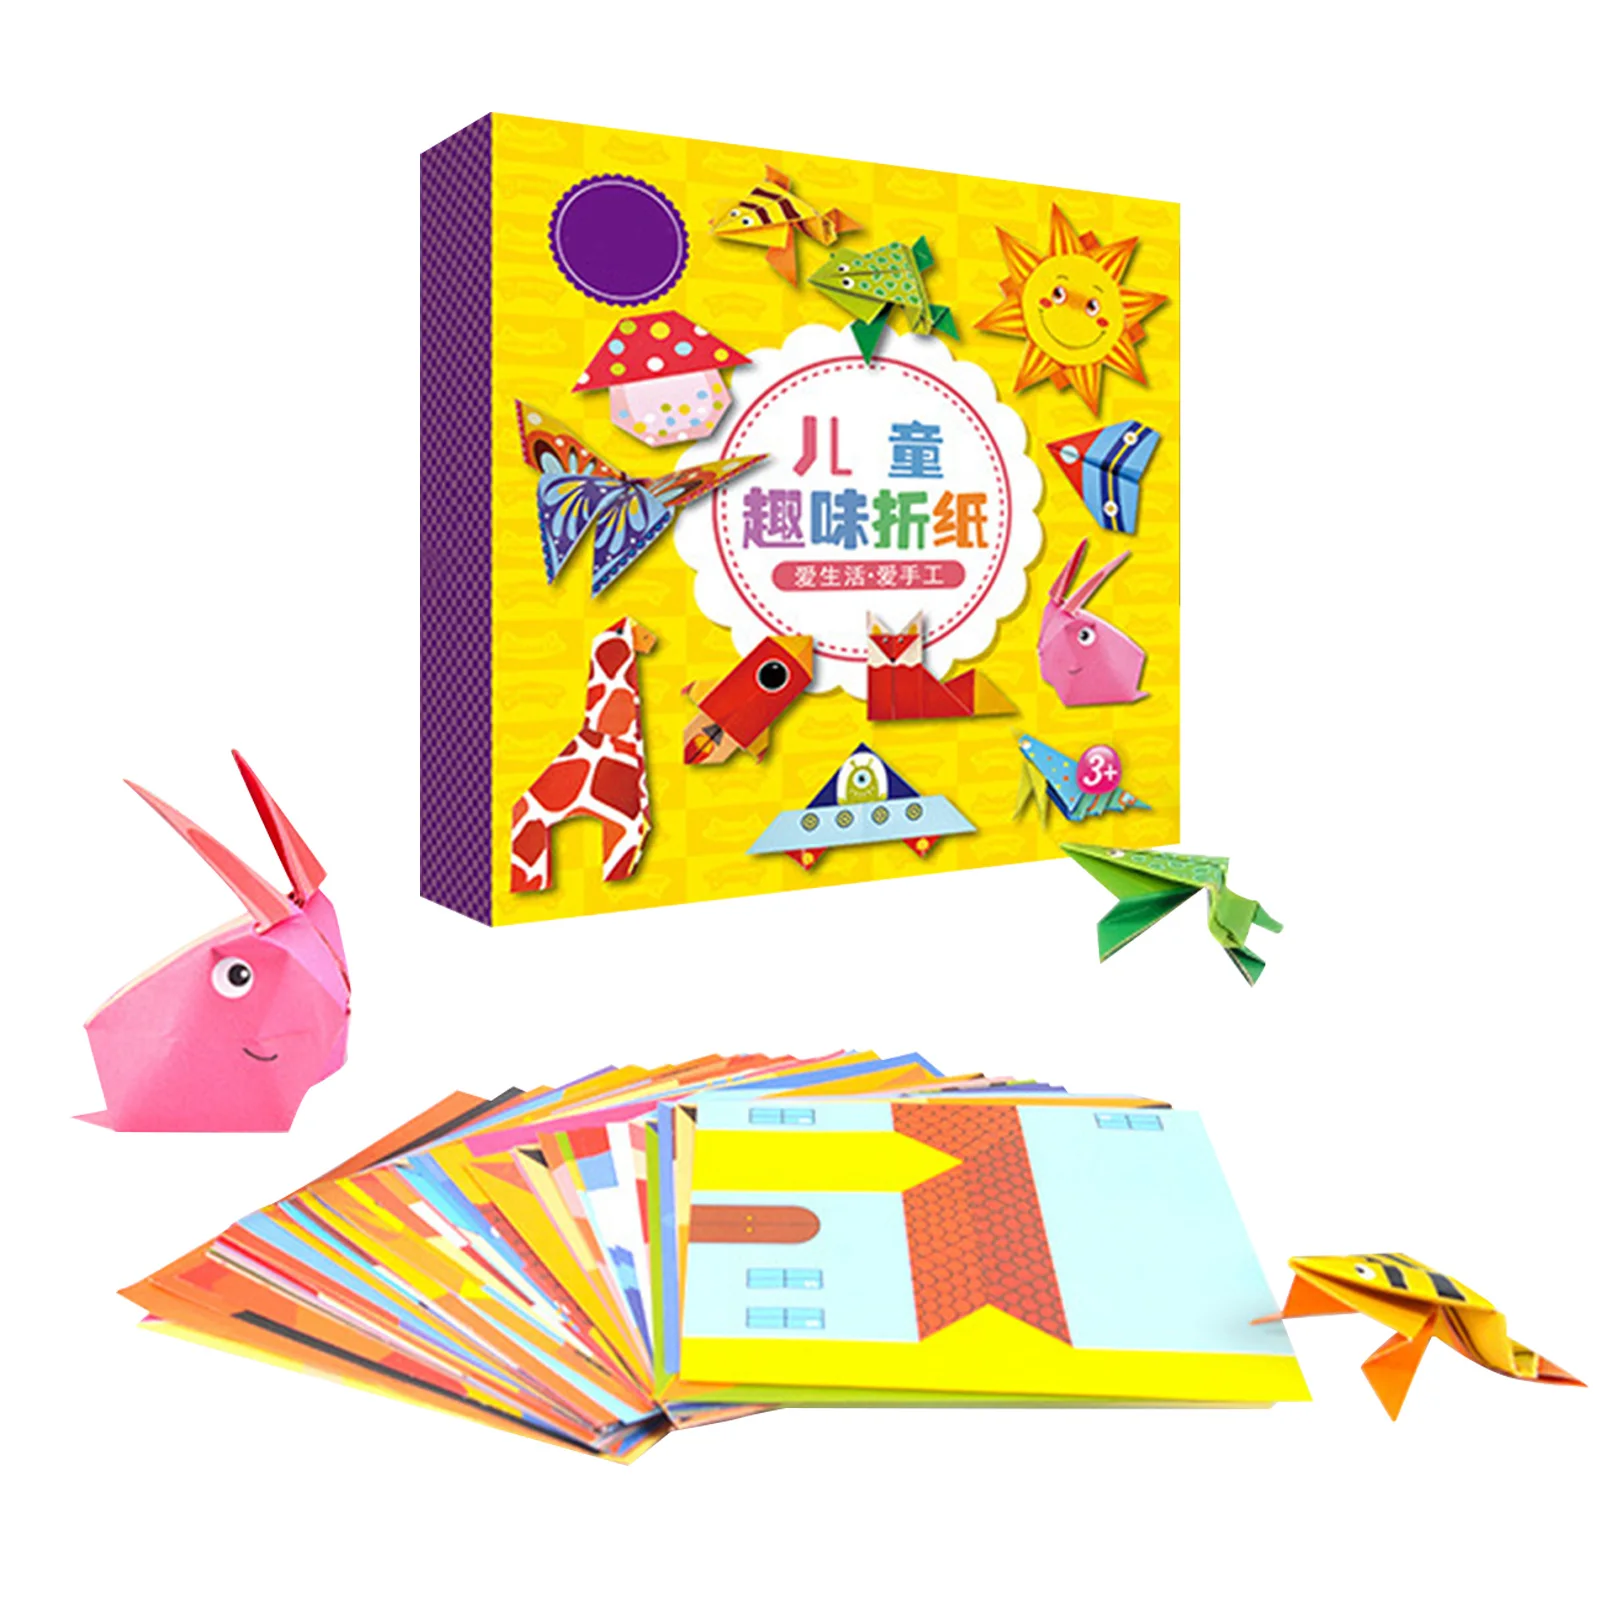 

Origami Paper Colorful Fun DIY Animal Creativity Train Origami Color Stereoscopic Handicraft Toys For Children